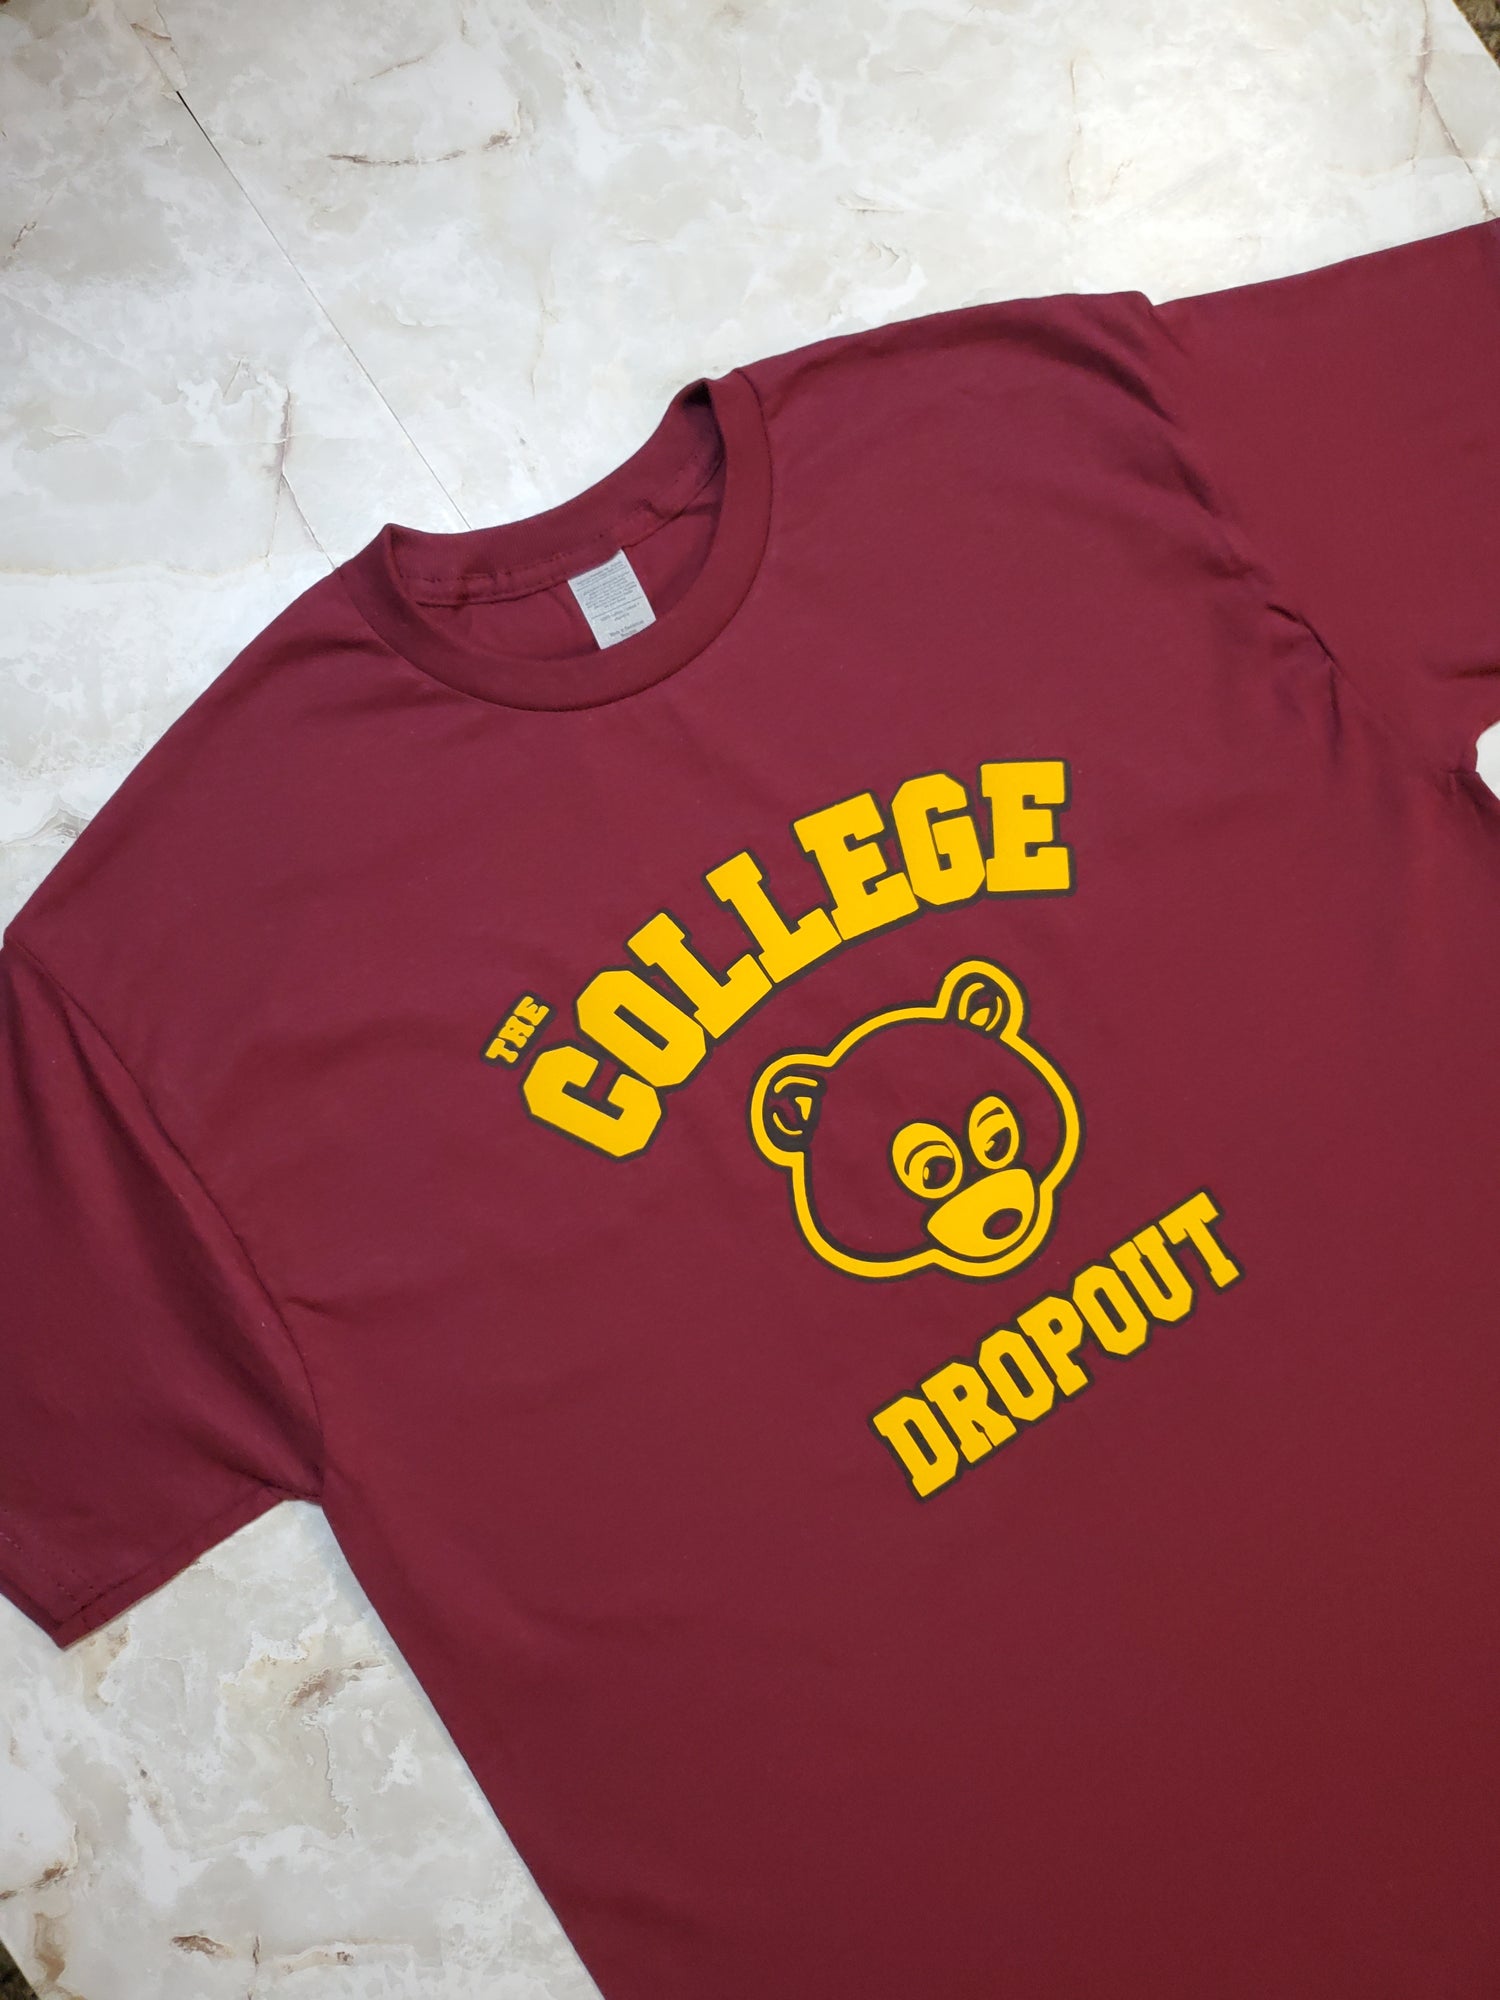 College Dropout T-Shirt - Centre Ave Clothing Co.